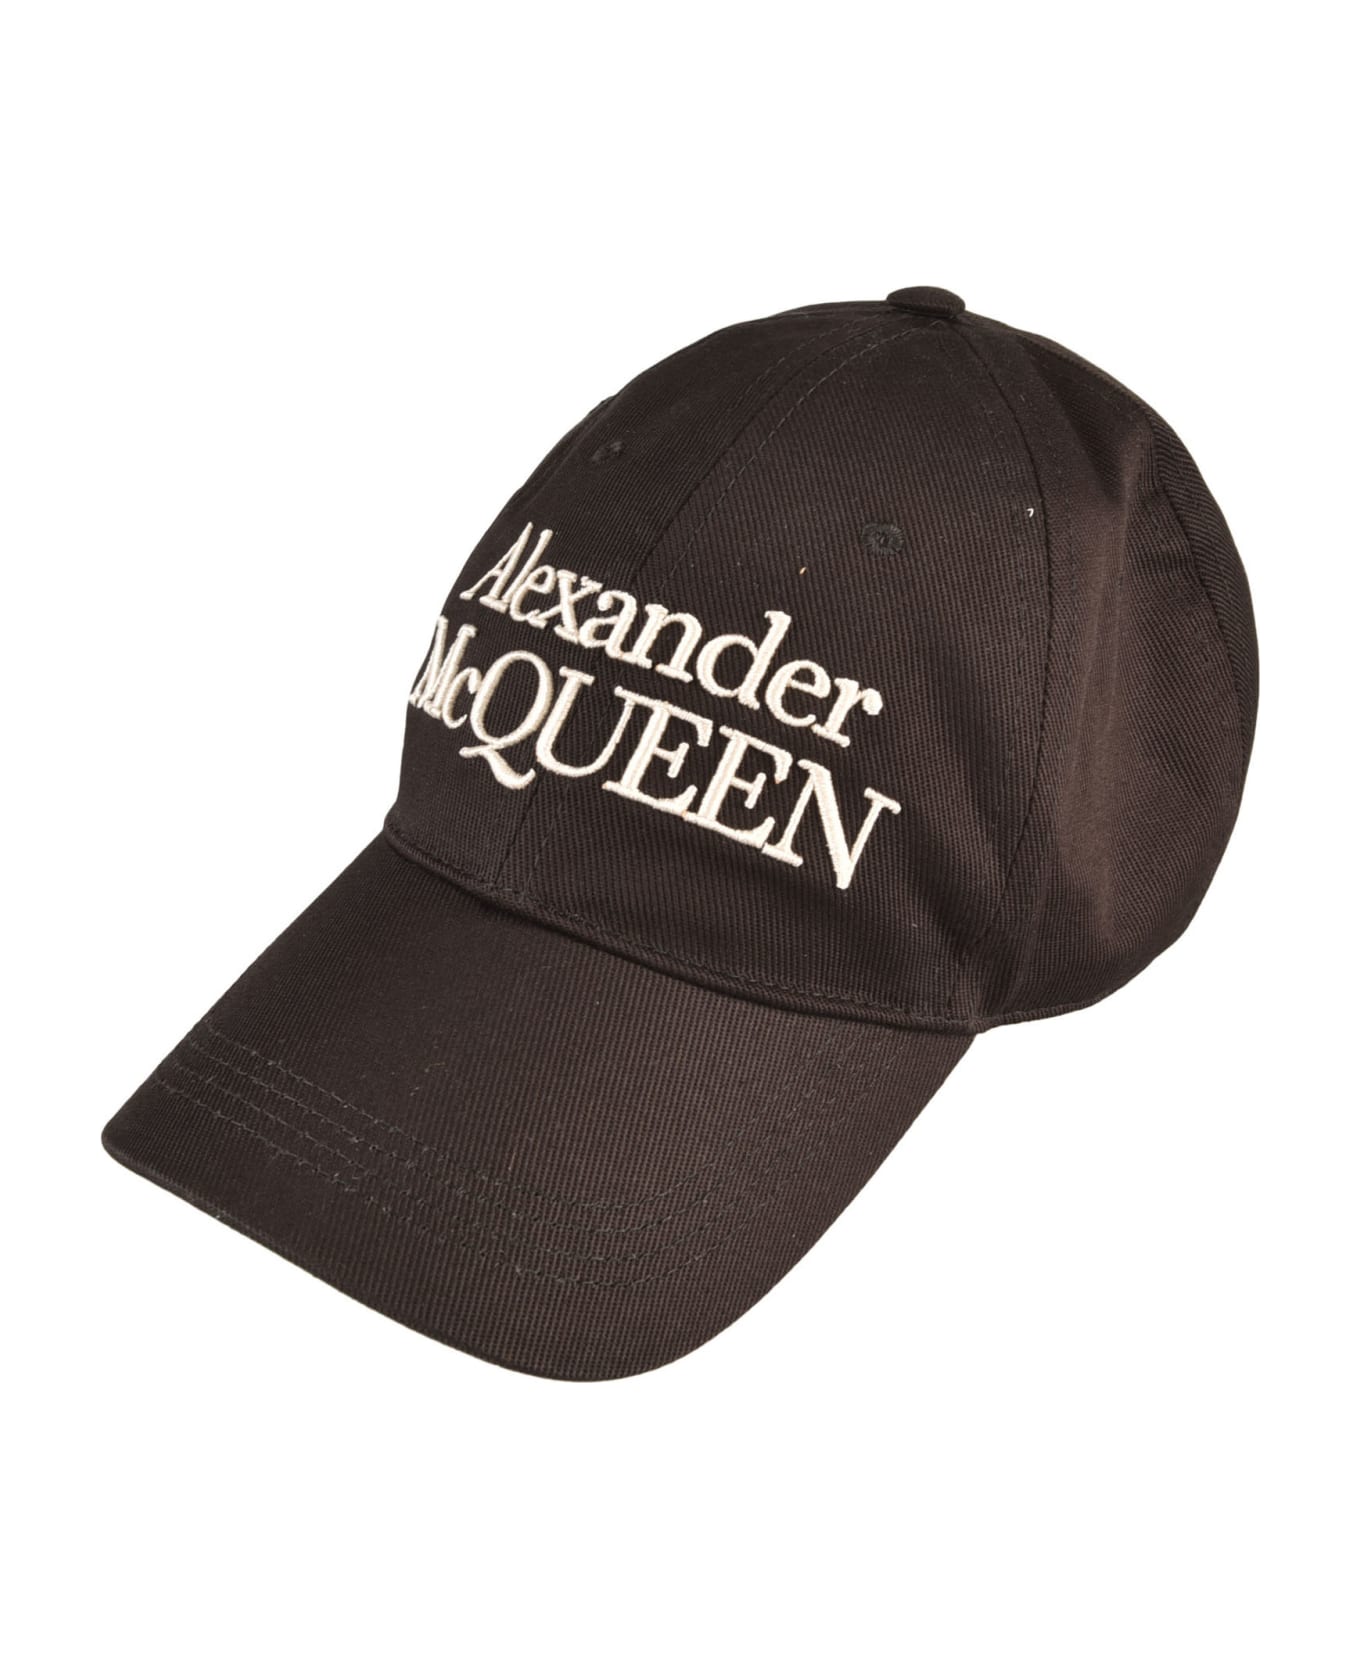 Alexander McQueen Stacked Hat - Black/Ivory